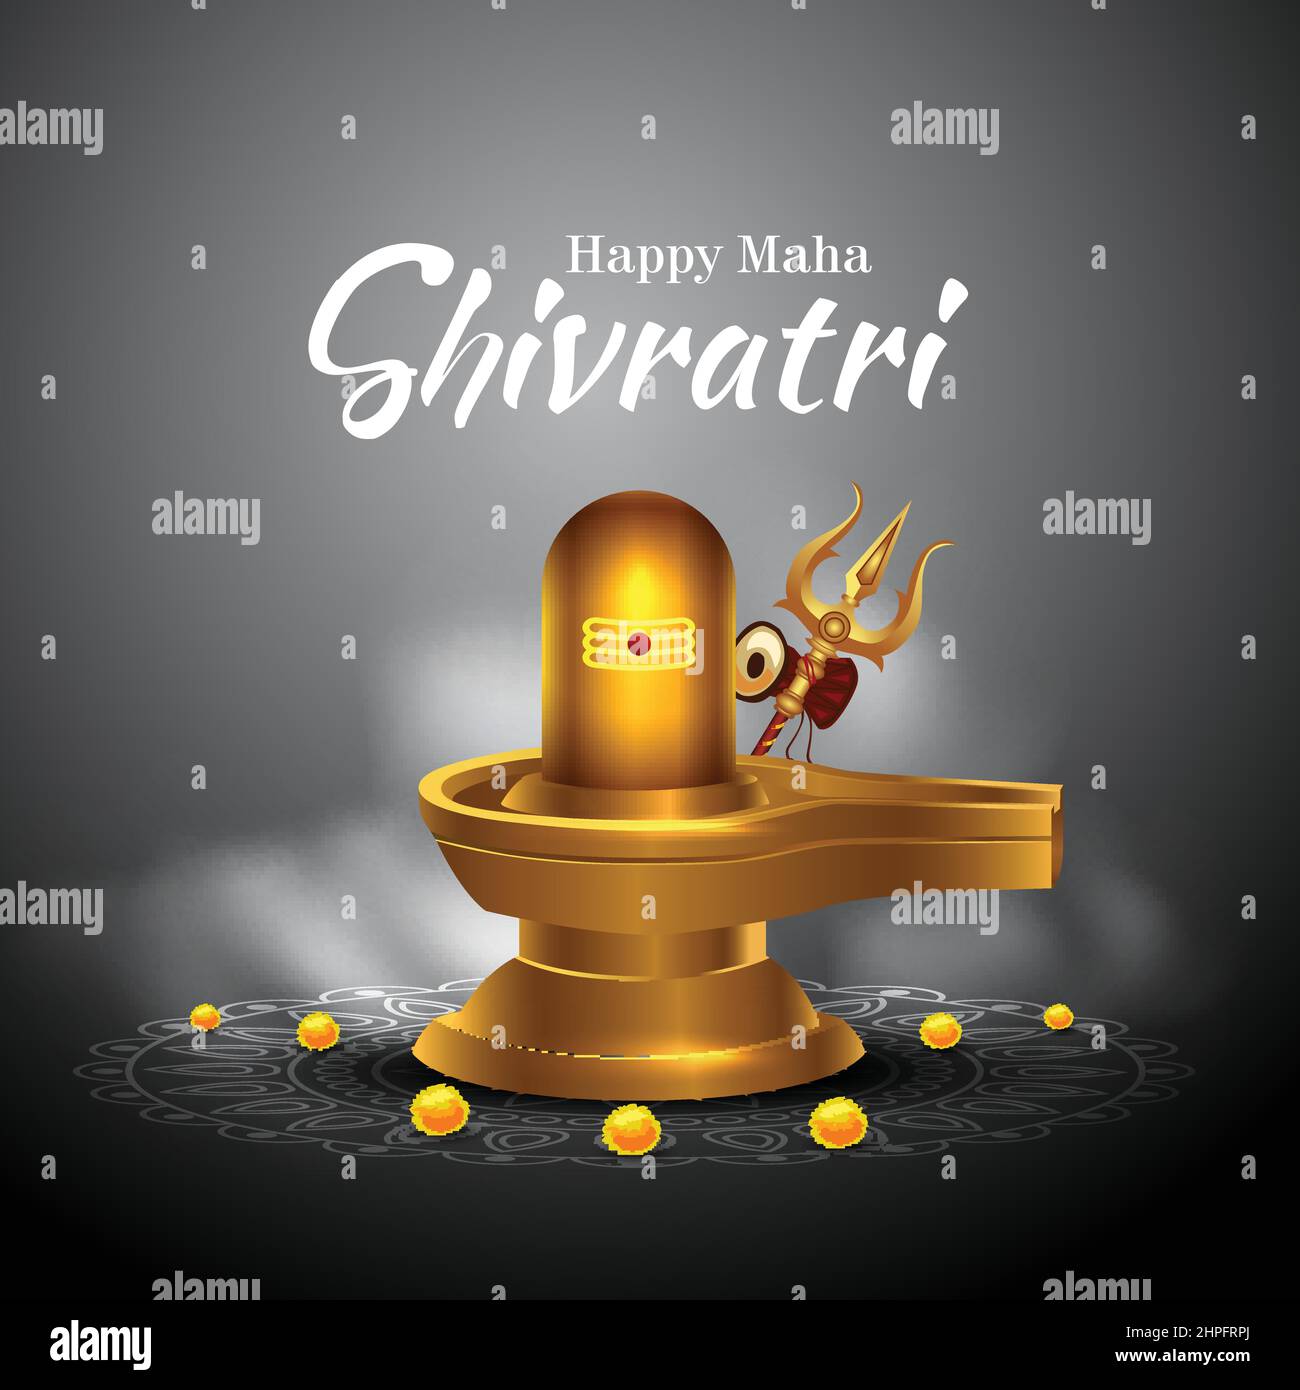 Happy Maha Shivratri With Shiv Ling A Hindu Festival Celebrated Of Lord Shiva Night English 1963